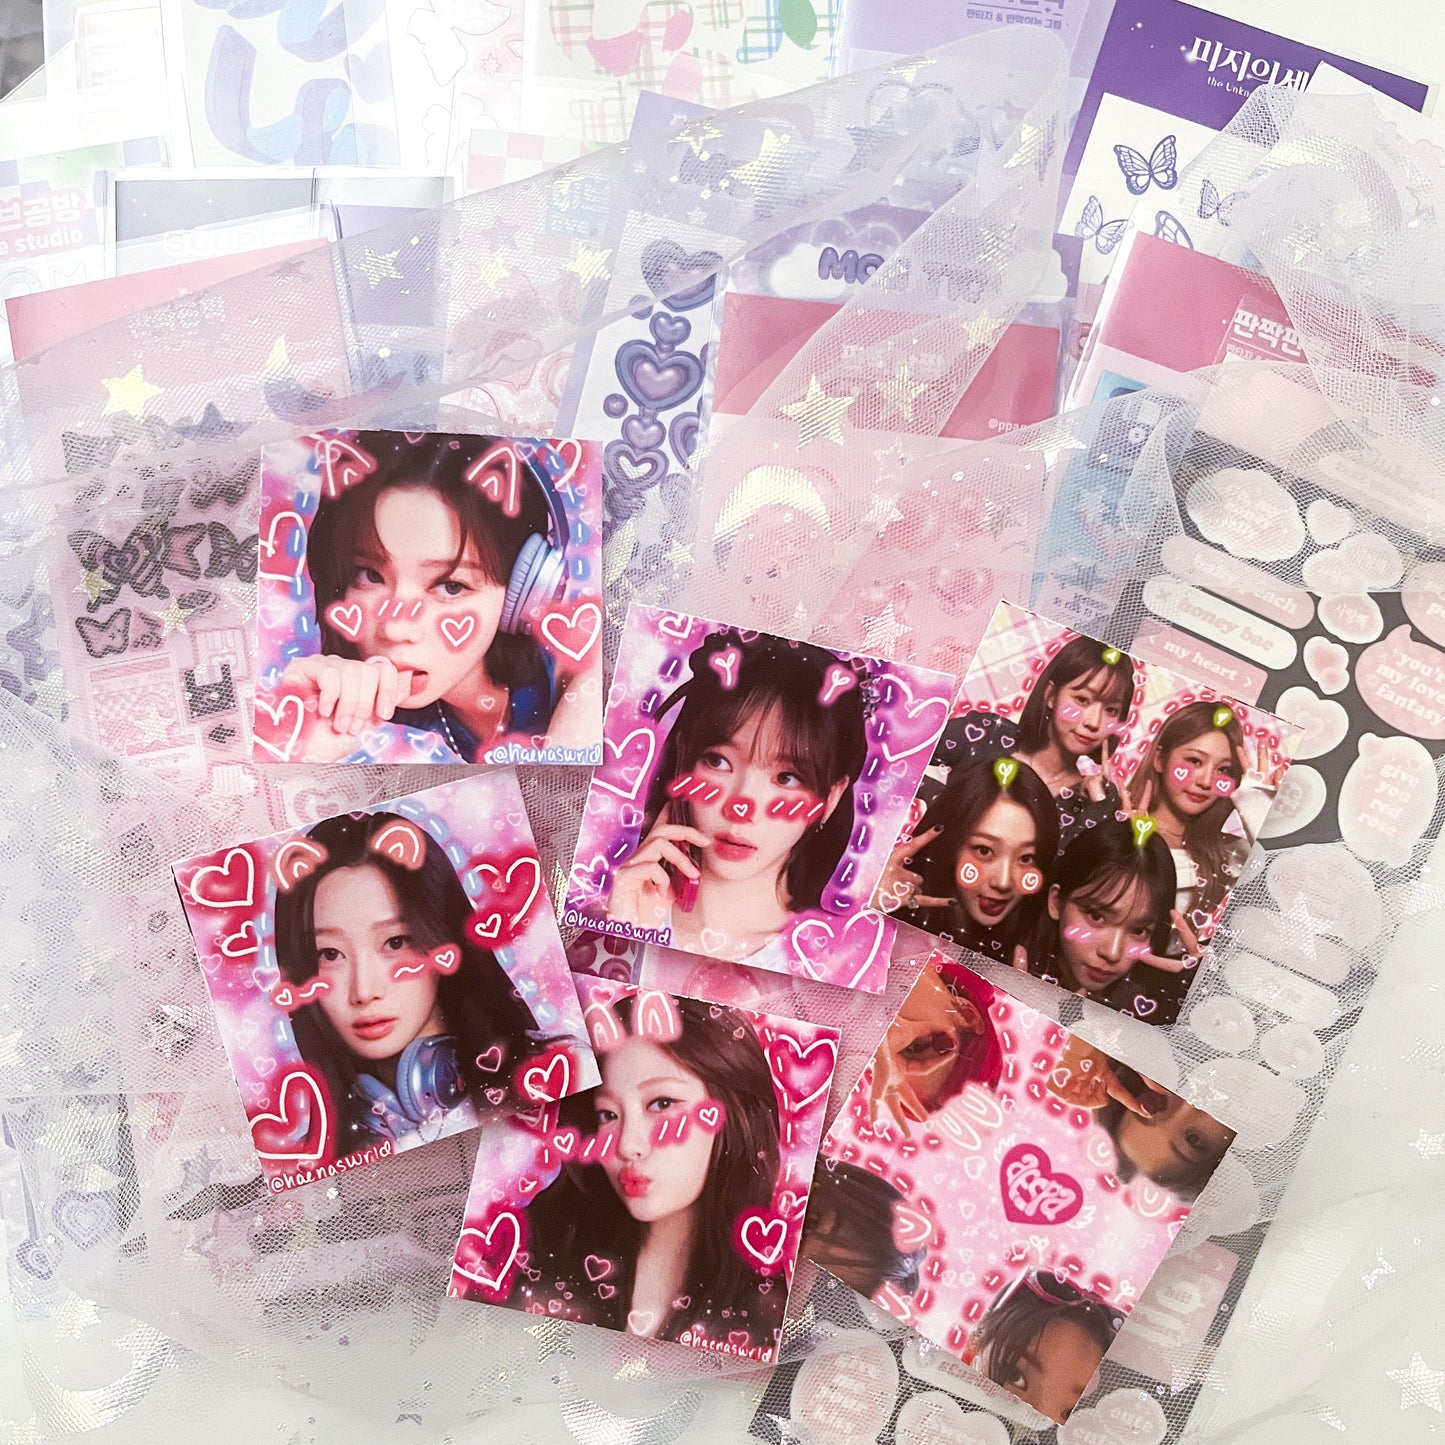 [haenaswrld] girls aespa sticker set + random pack